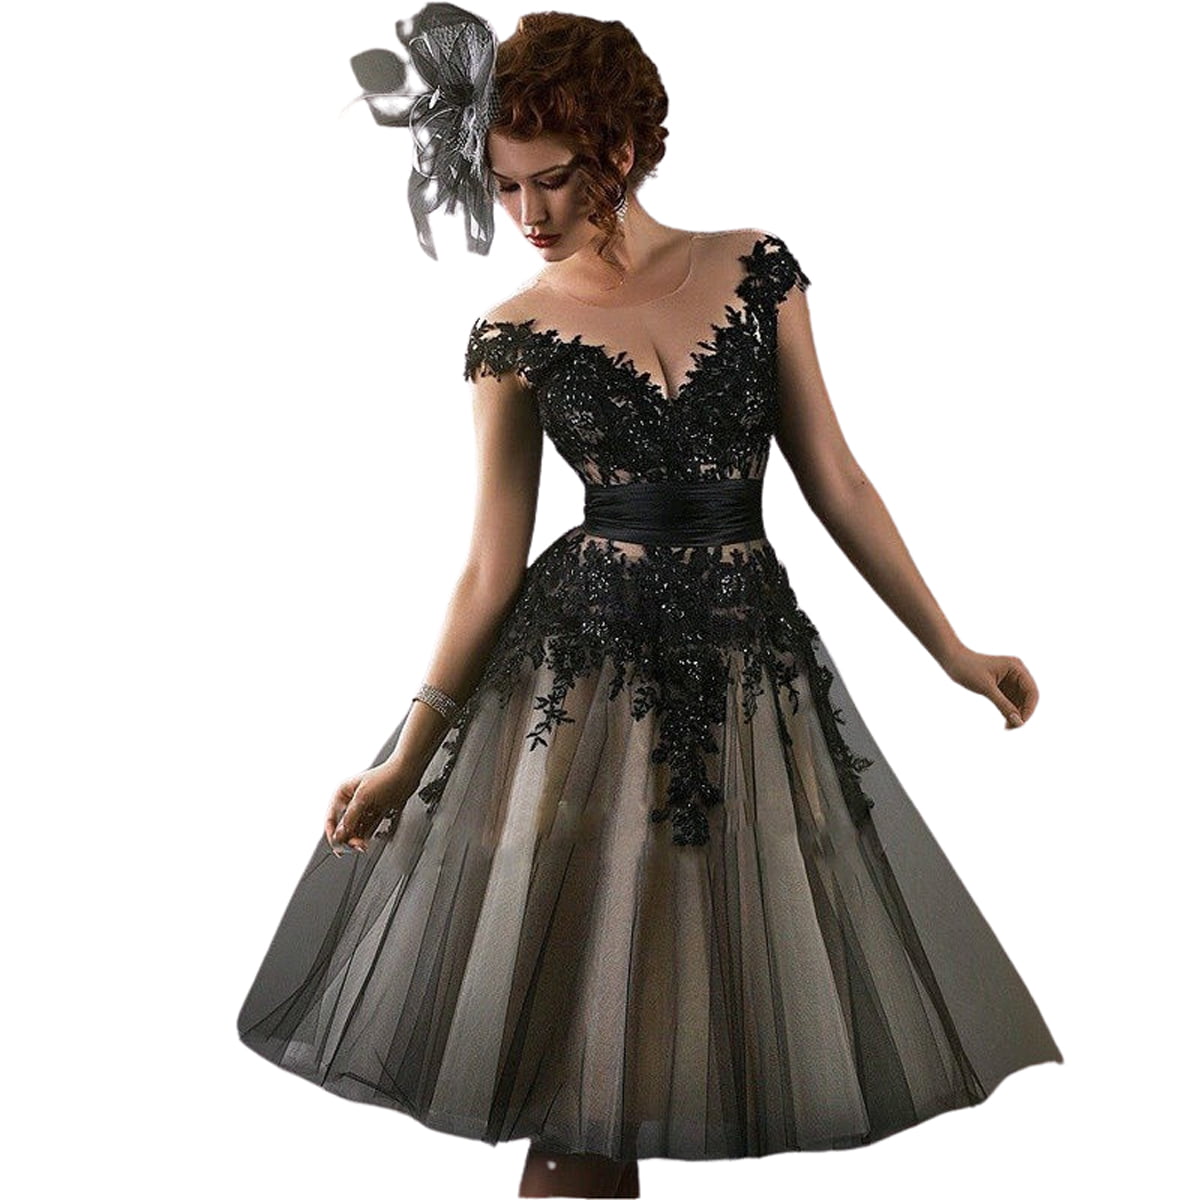 Vintage black and white printed dress flap dress size 6 soft chiffon dress vintage cotton dress tea length dress